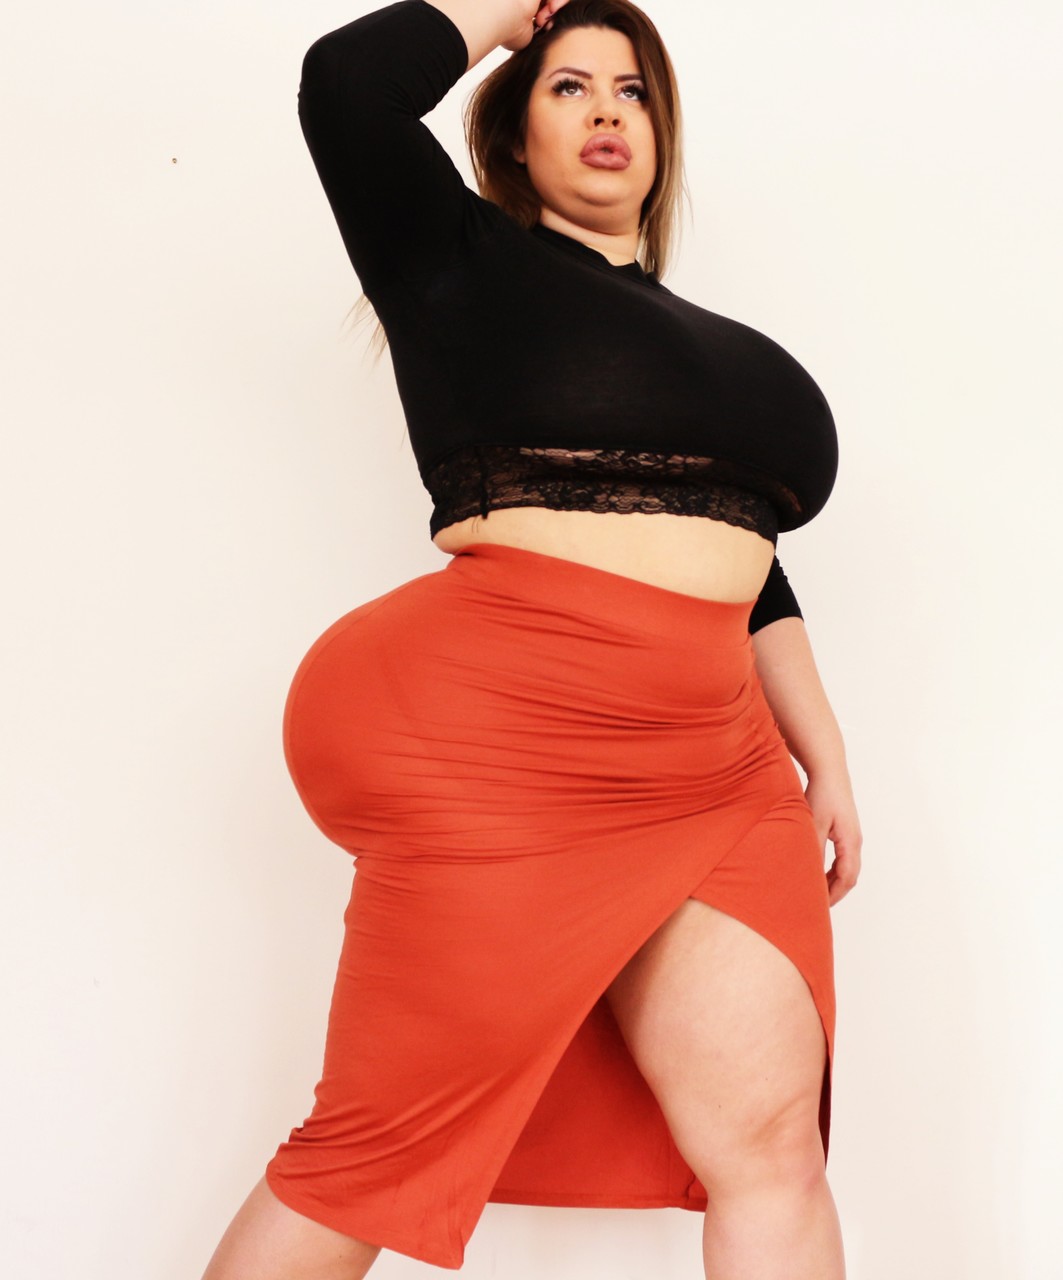 Stunning MILF fatty Natasha Crown flaunting her very big ass in a tight skirt porn photo #423816656